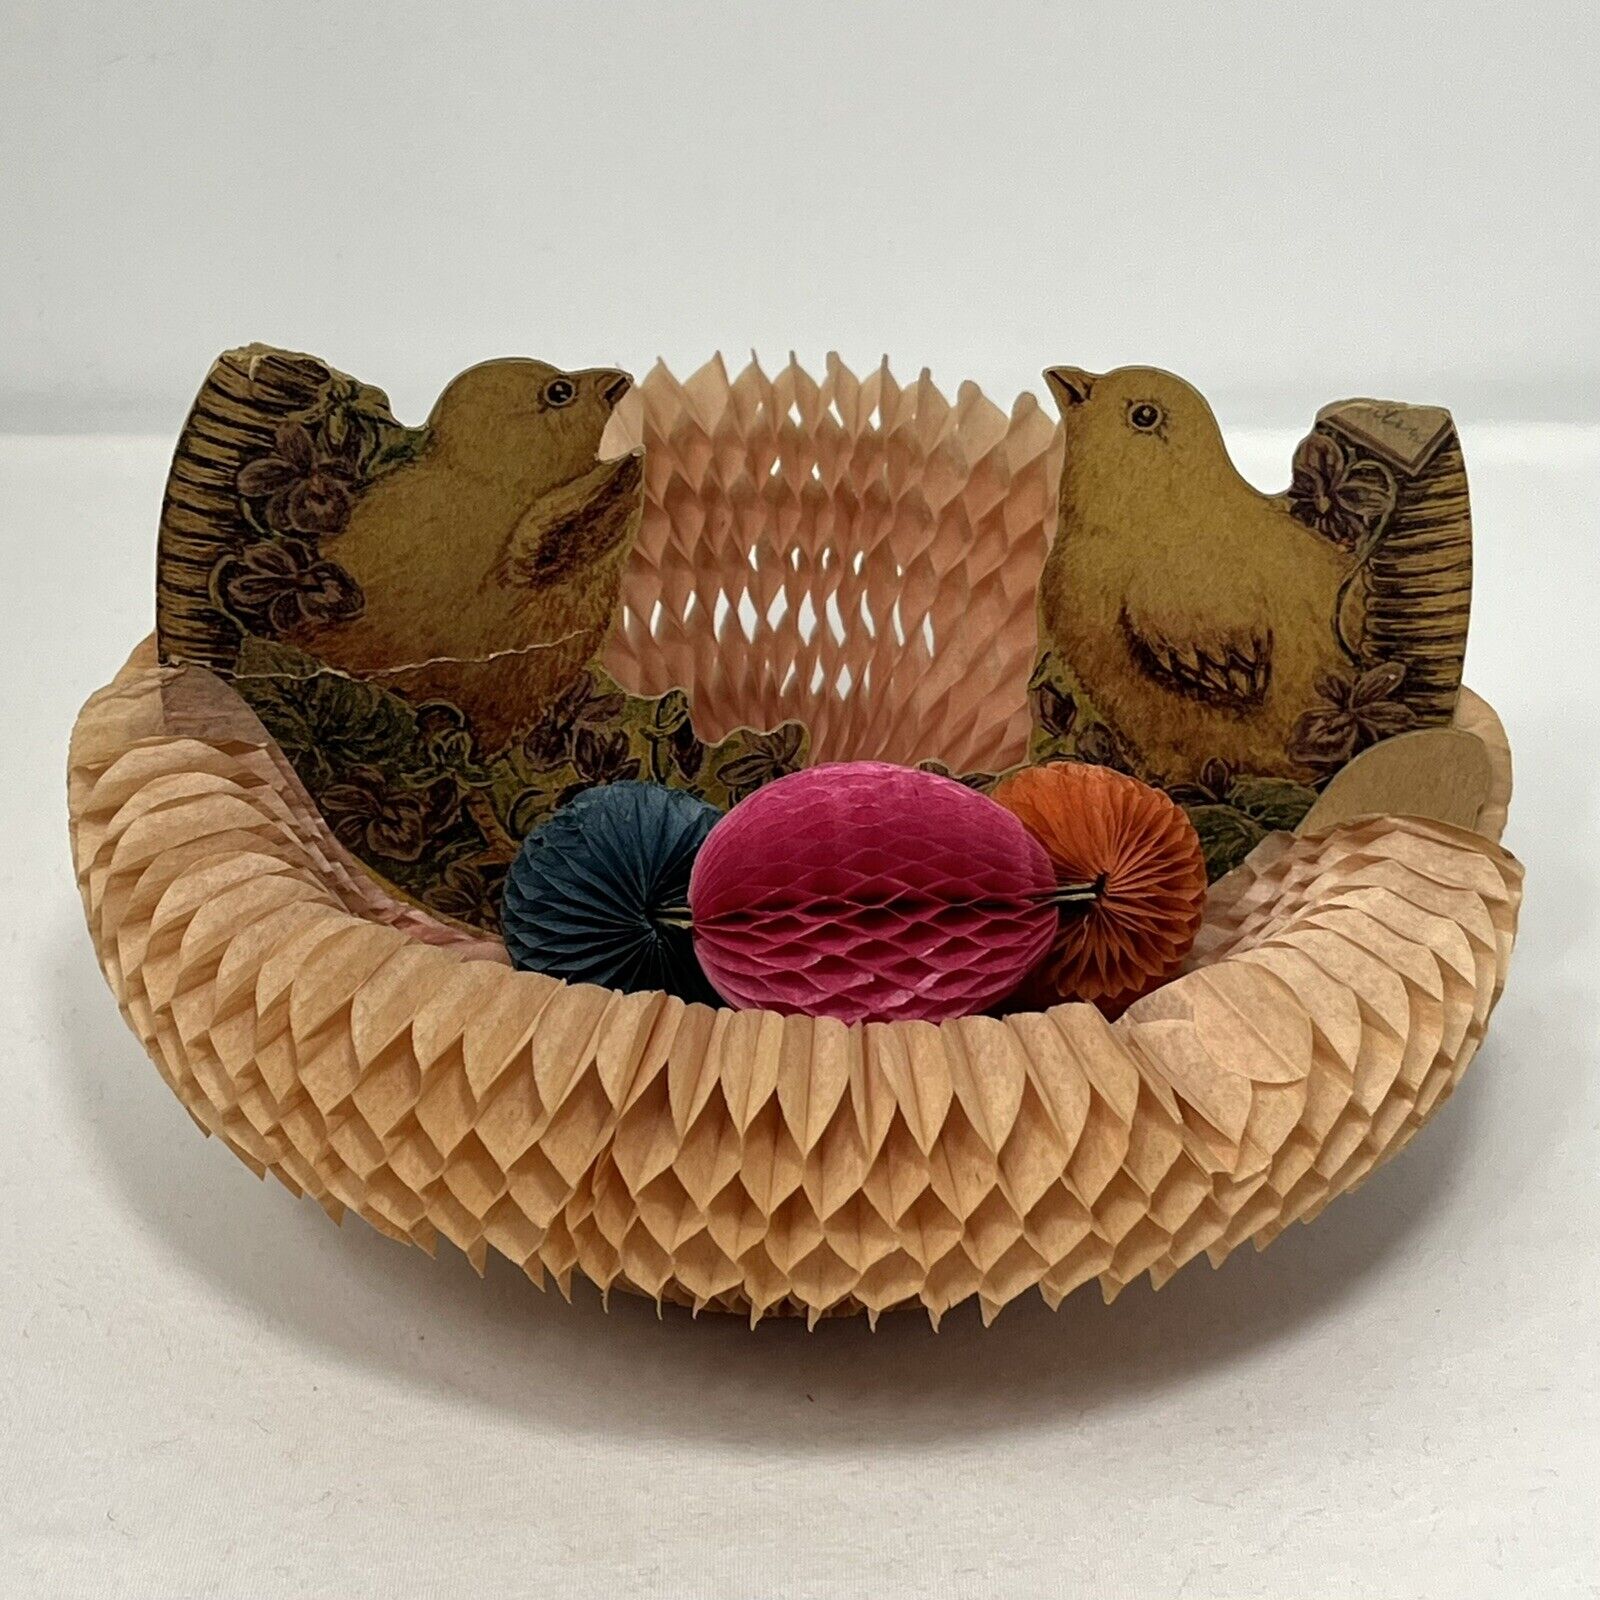 1925 Beistle Honeycomb 3D Basket Chickens Eggs 9”x 8” Antique READ